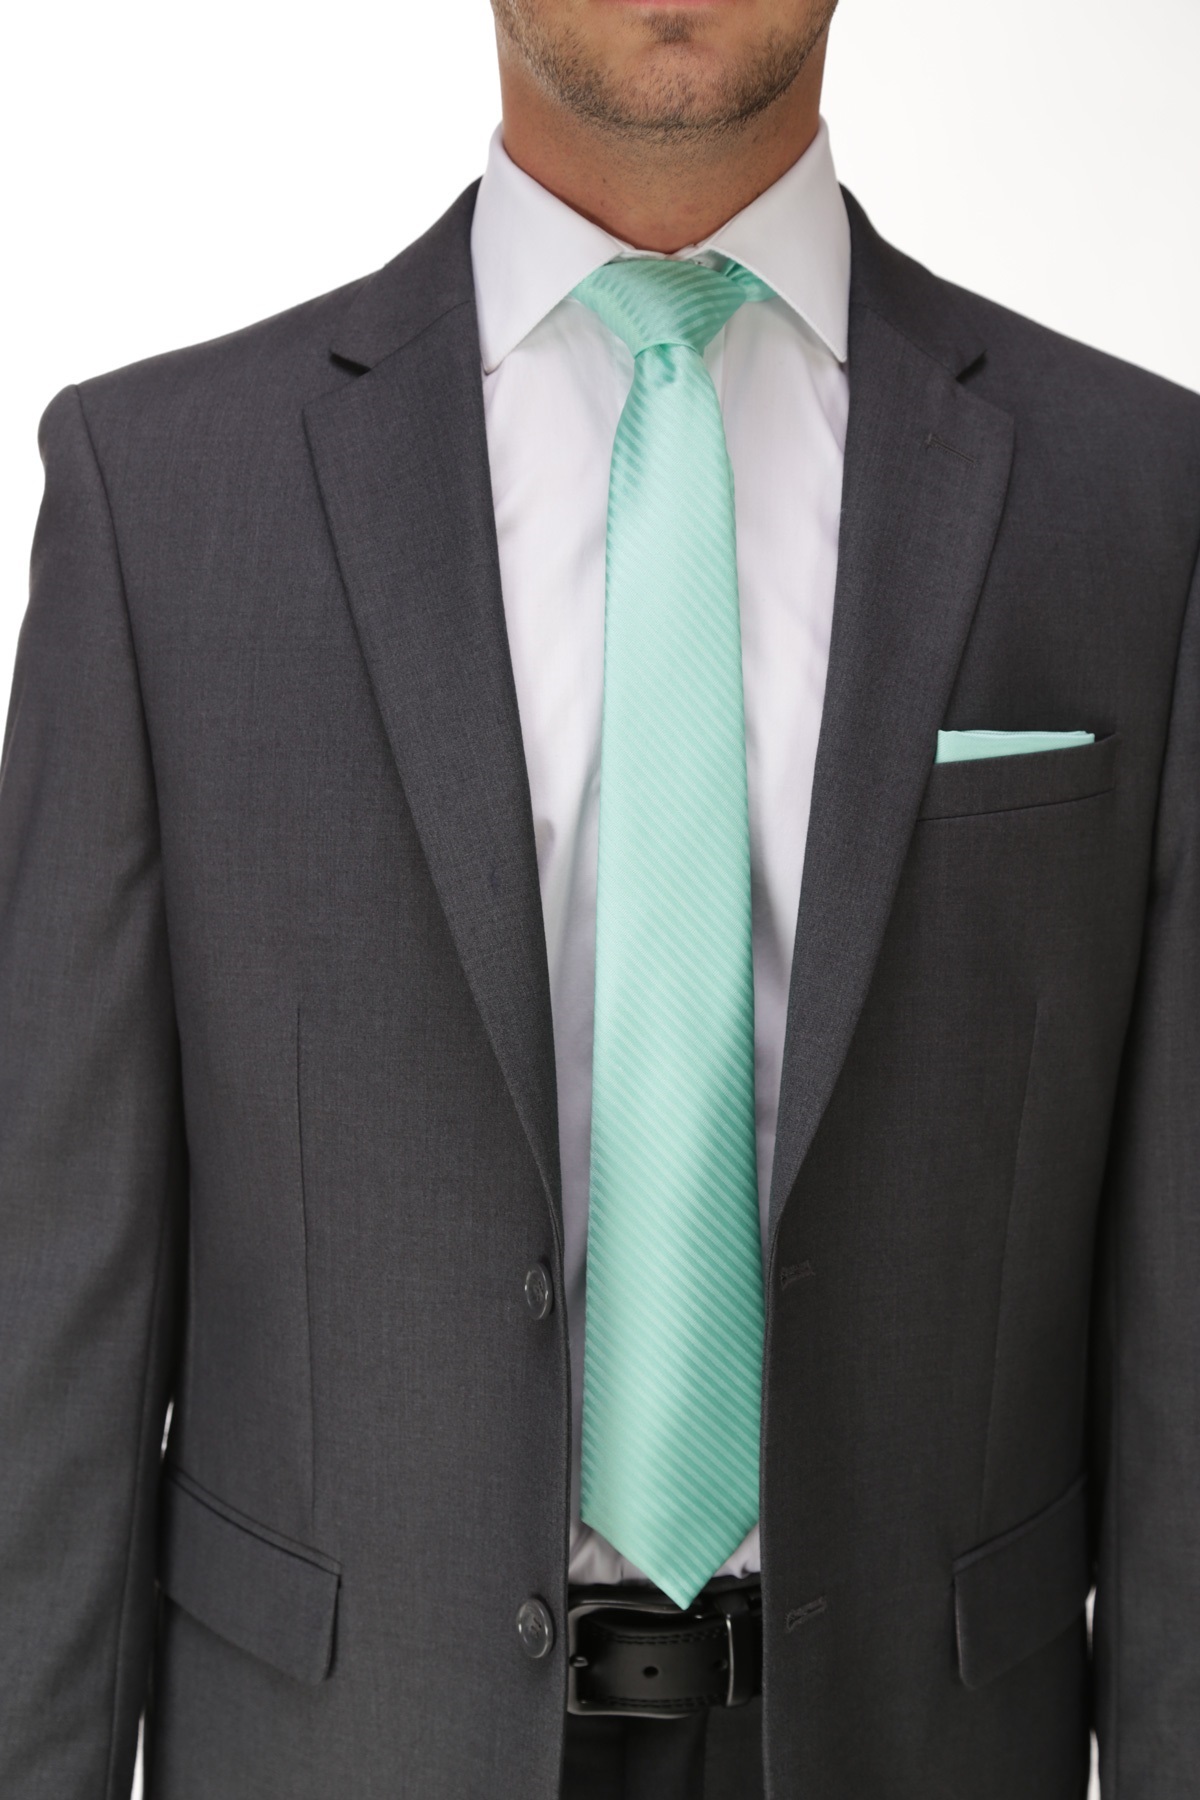 Buy Charcoal Grey Suit Sets for Men by ARROW Online | Ajio.com